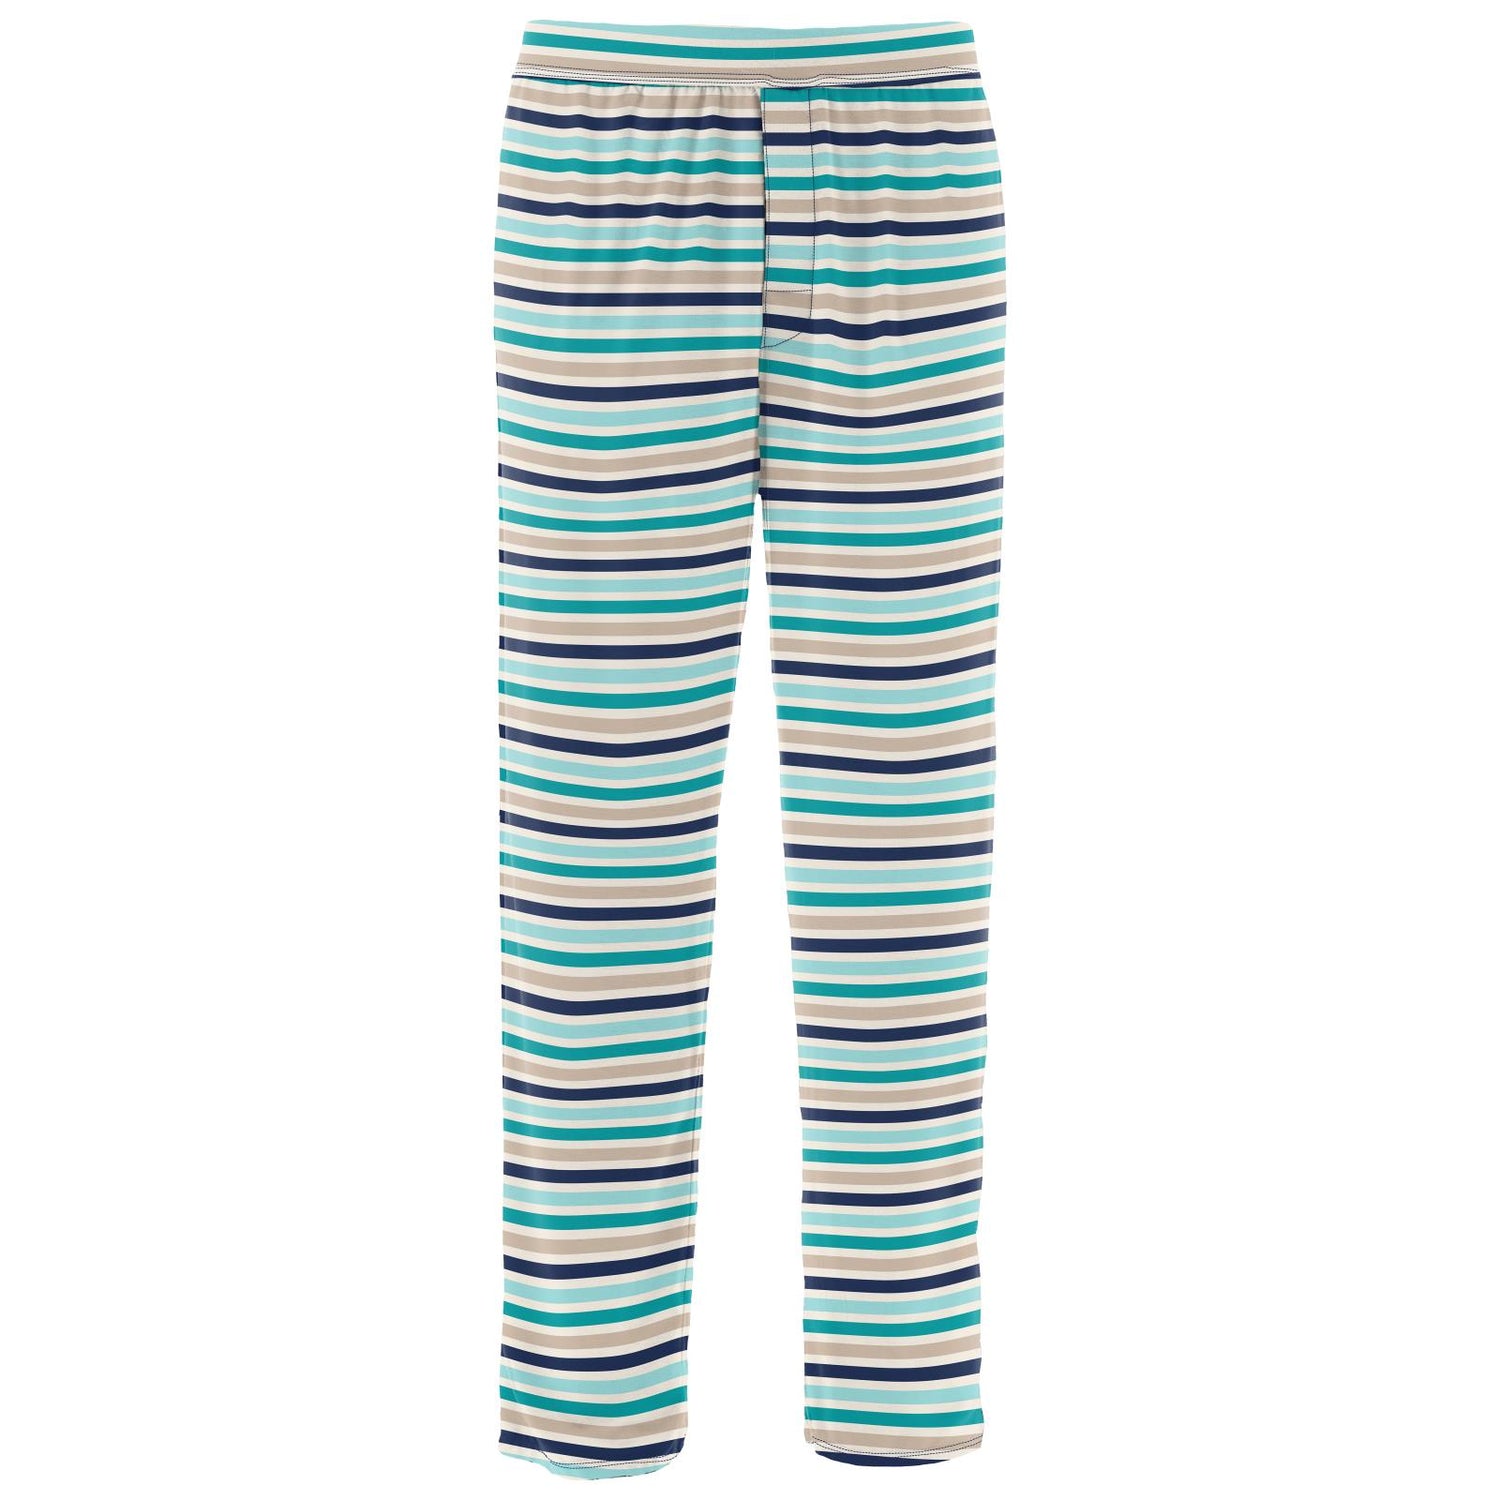 Men's Print Pajama Pants in Sand and Sea Stripe